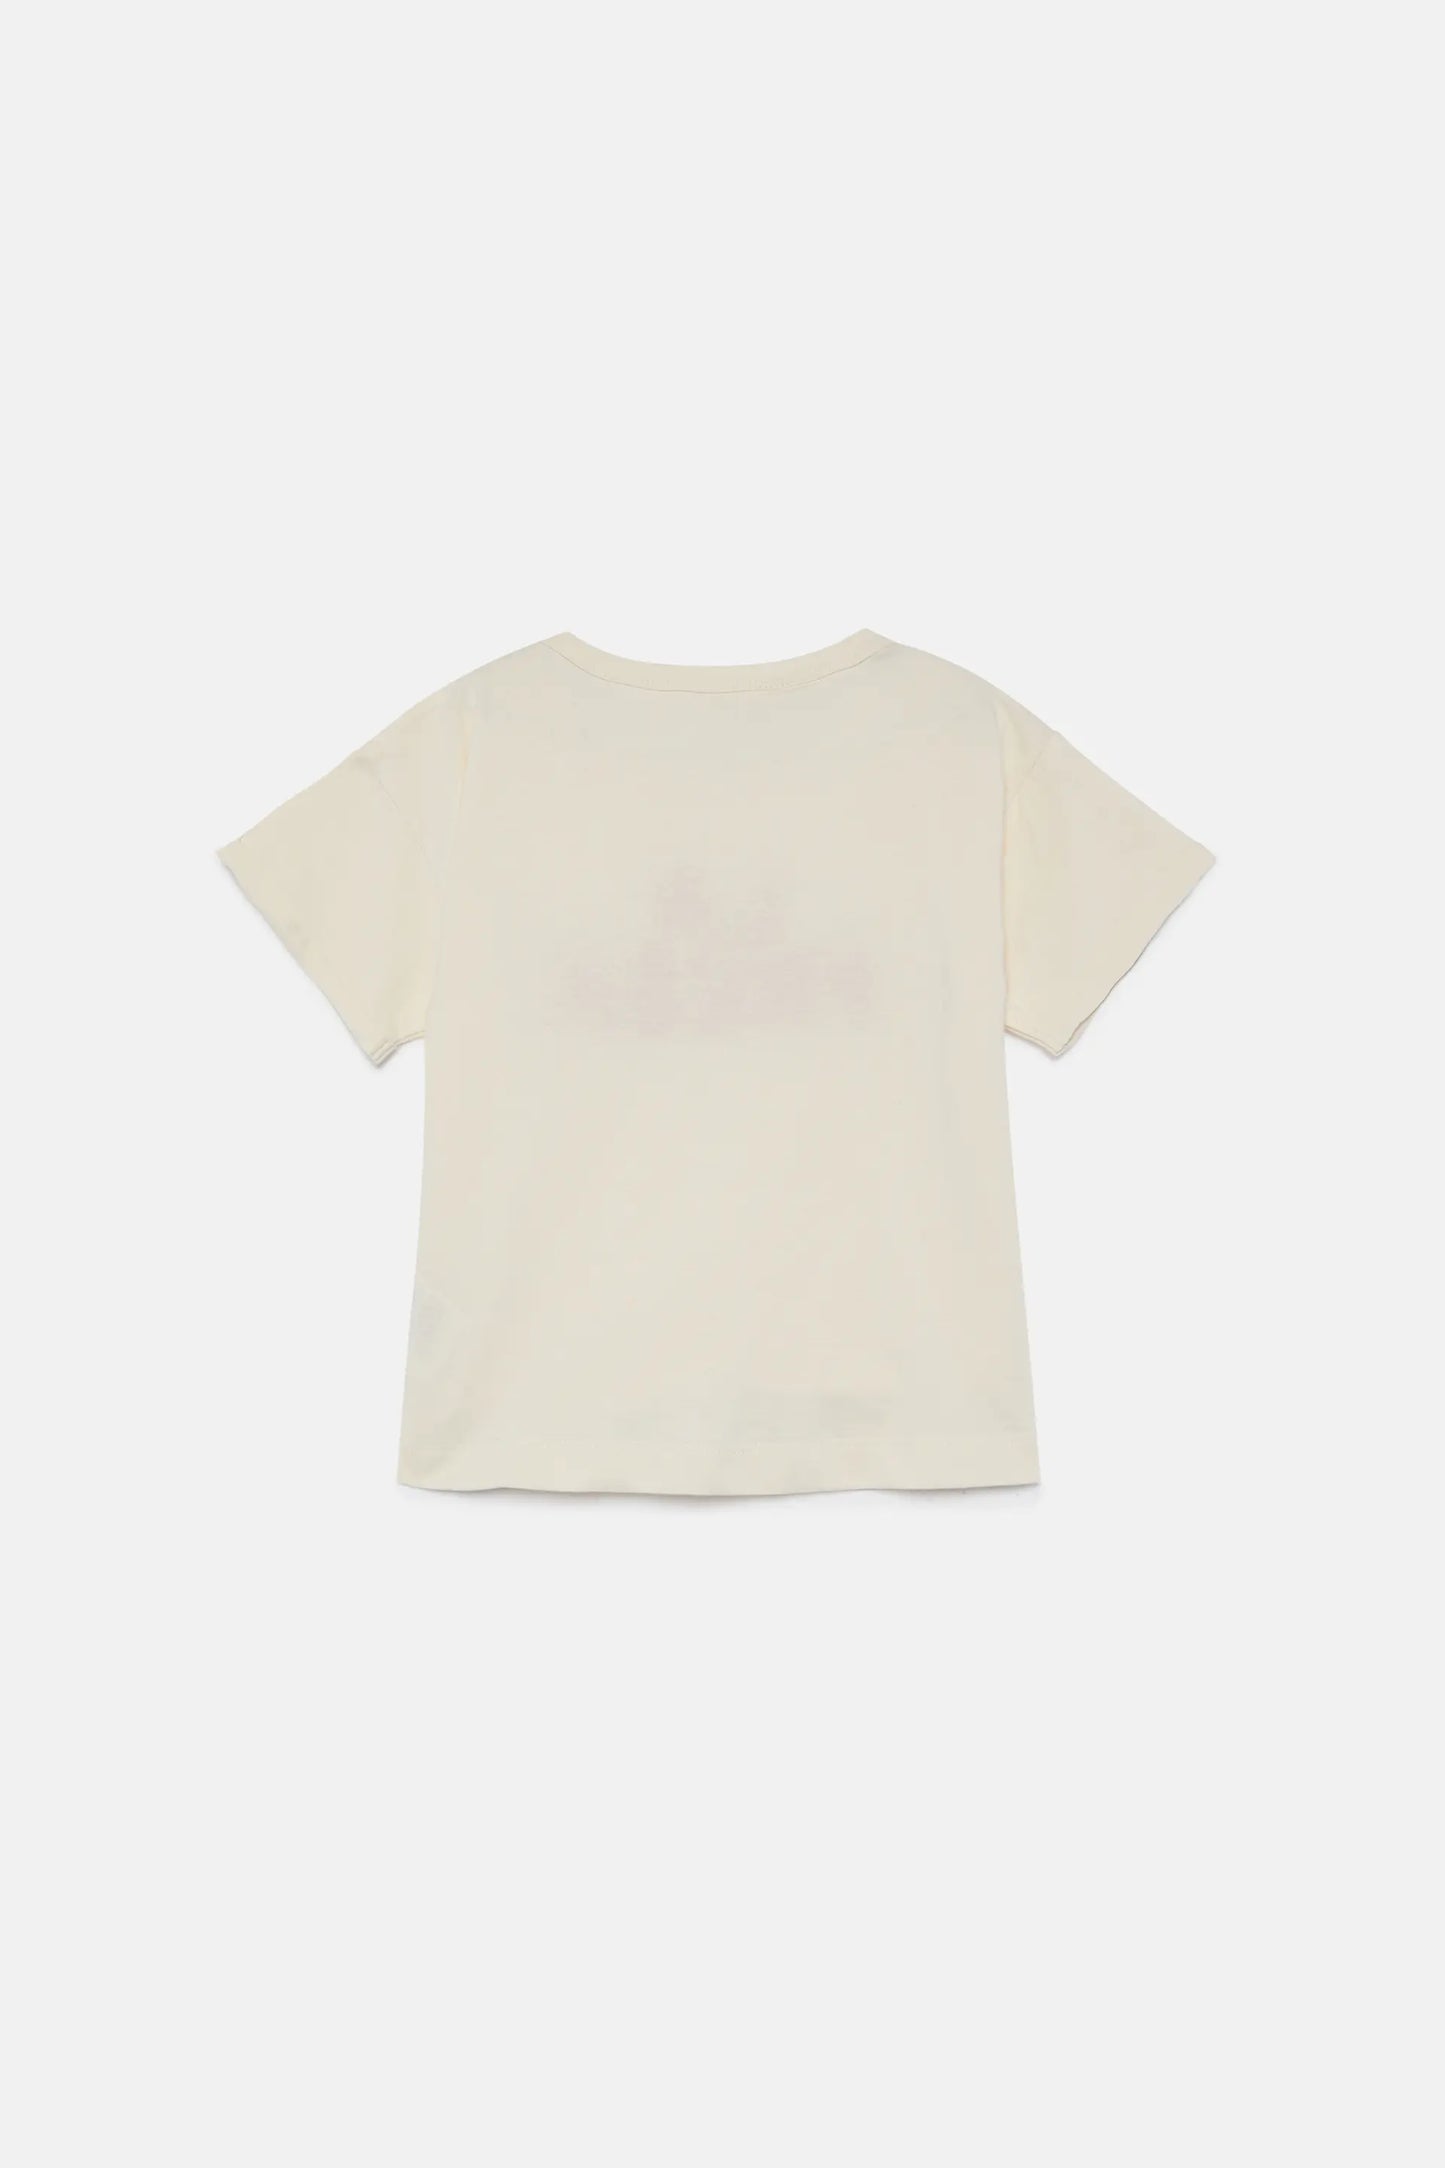 T-shirt unisex con fragola bianca